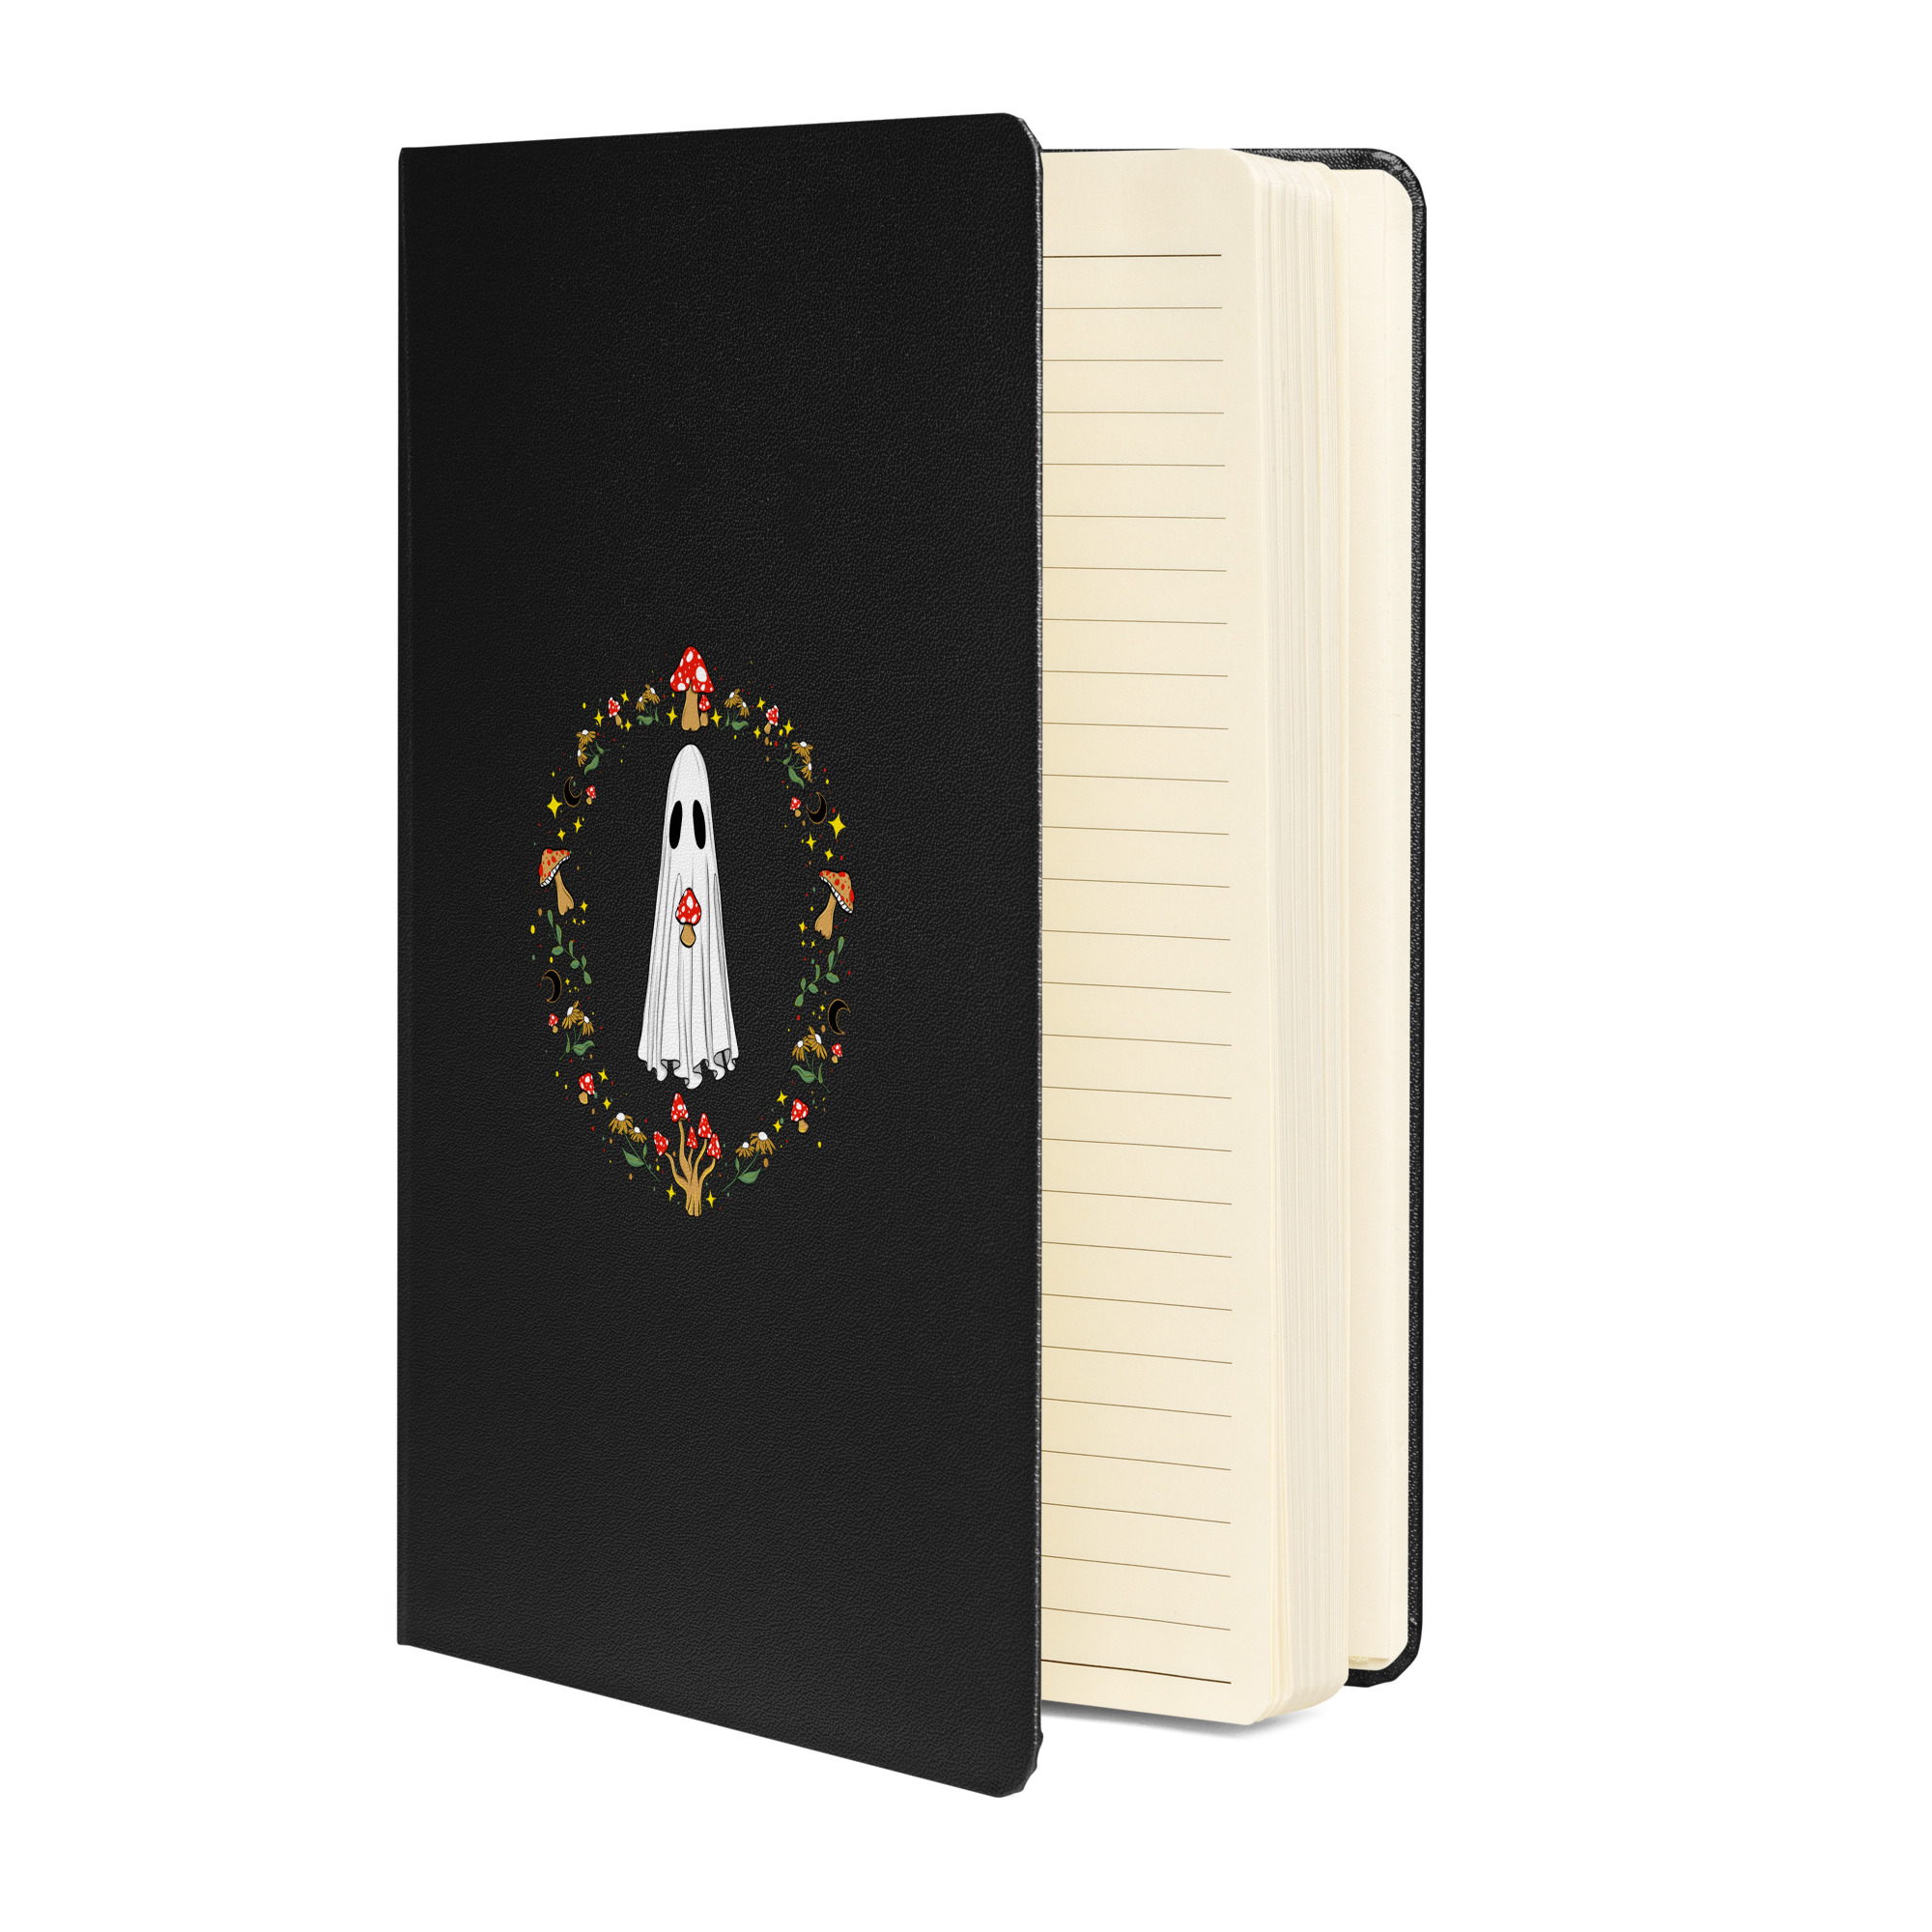 hardcover-bound-notebook-black-front-6537e35735ec6.jpg